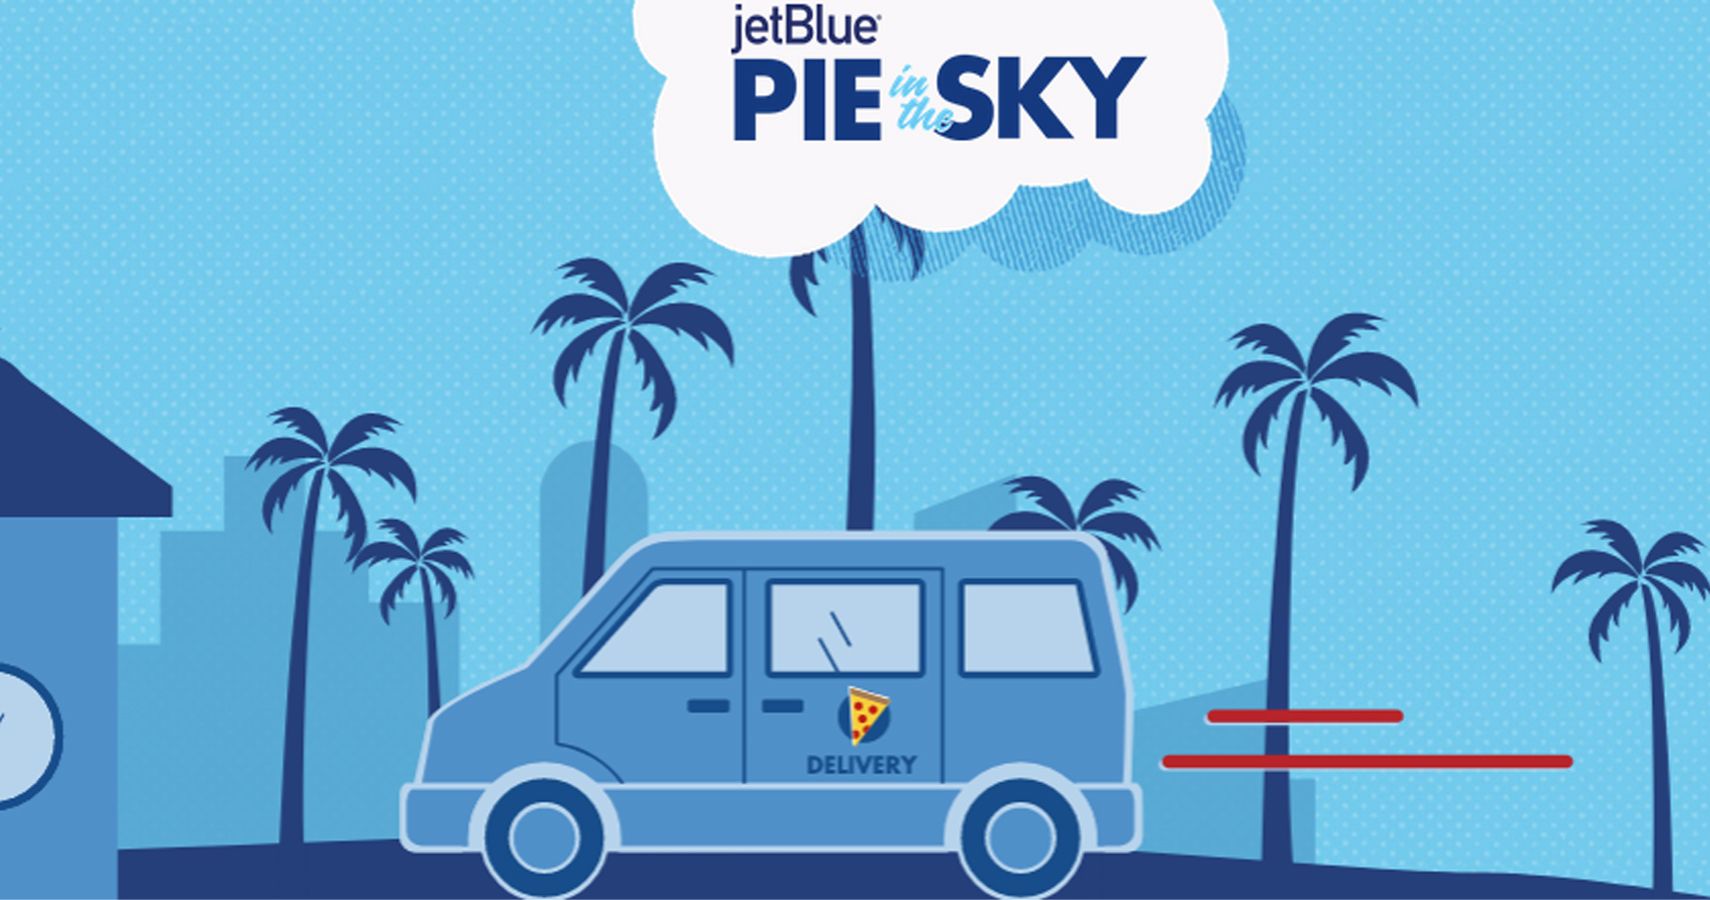 1672333588 304 A ultima promocao da JetBlue os viu entregando autentica pizza